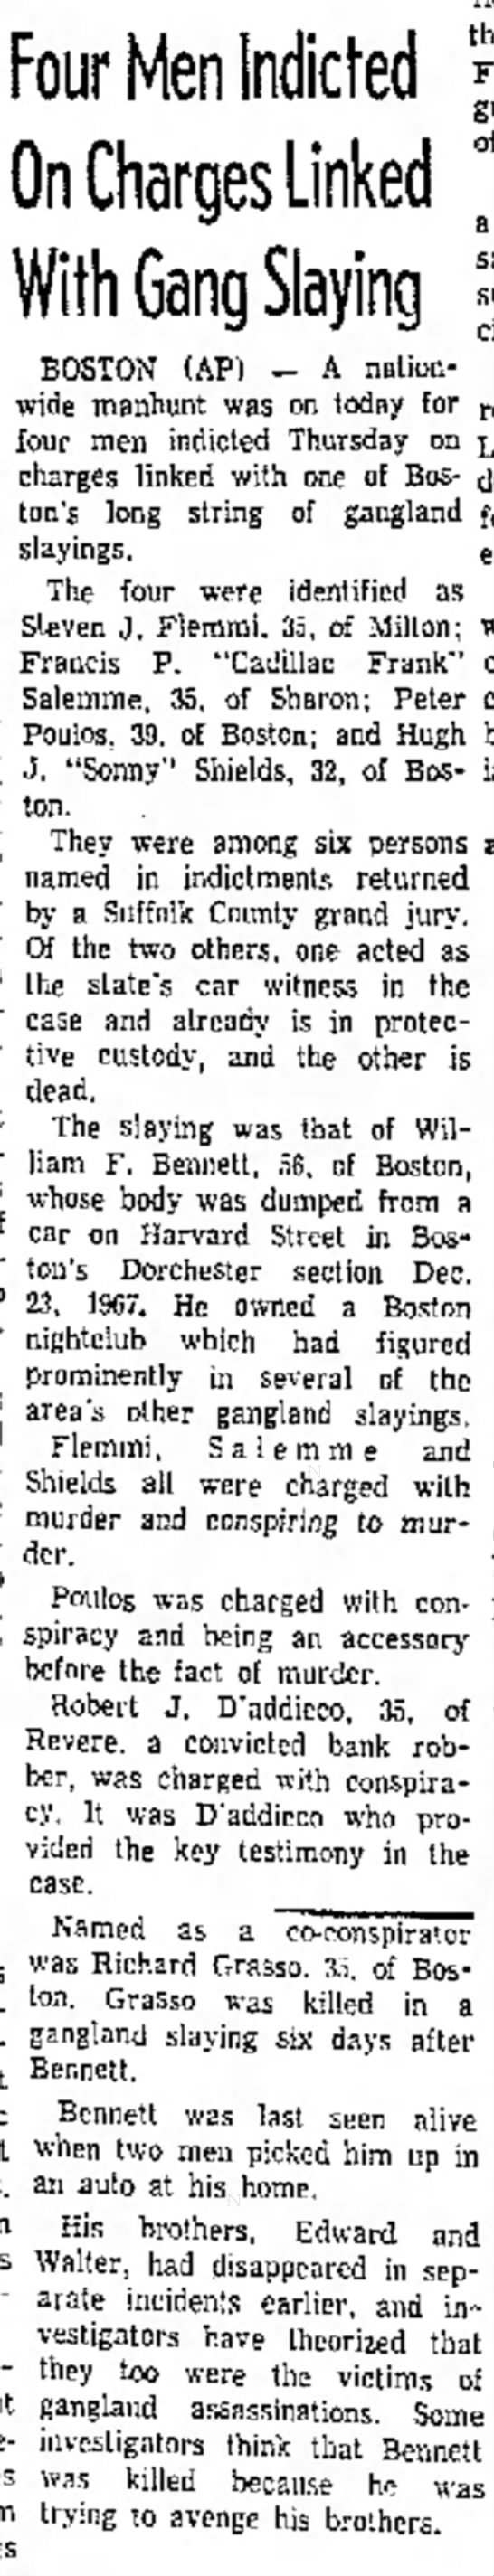 Flemmi, Salemme, Poulos, Shields indicted for Billy Bennett murder (12 Sept 1969) - 